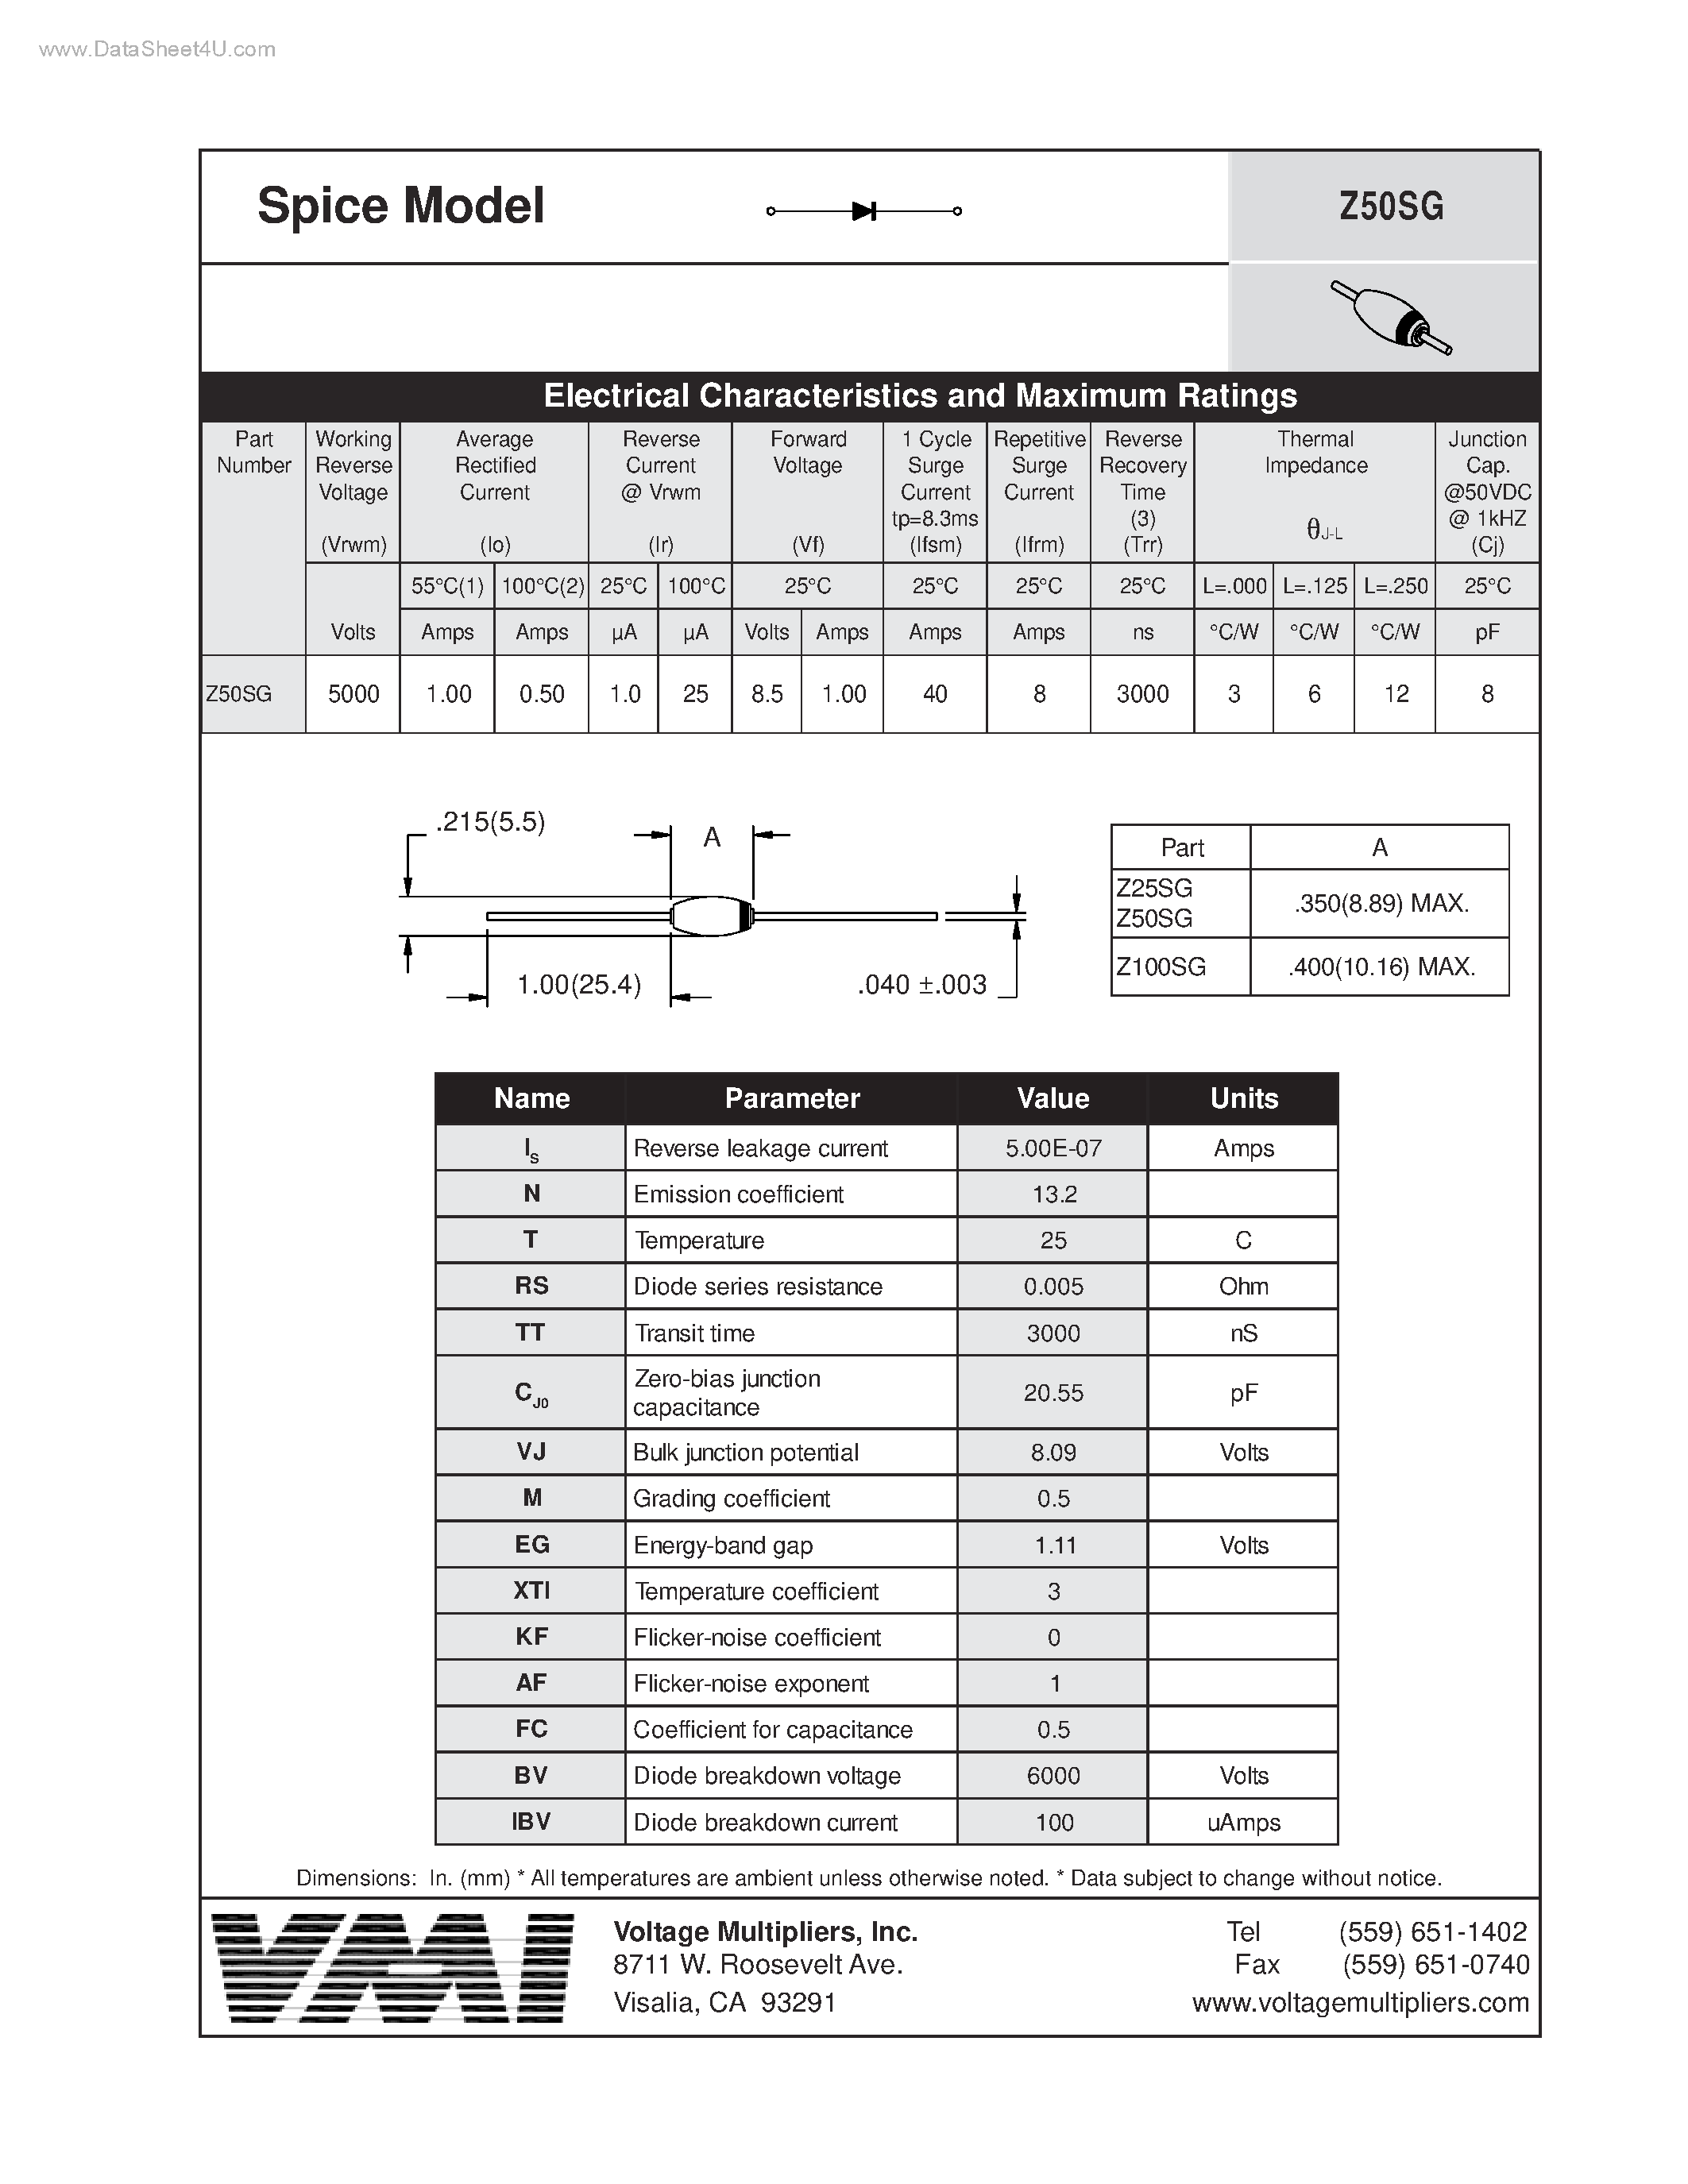 Datasheet Z50SG - Spice Model page 1